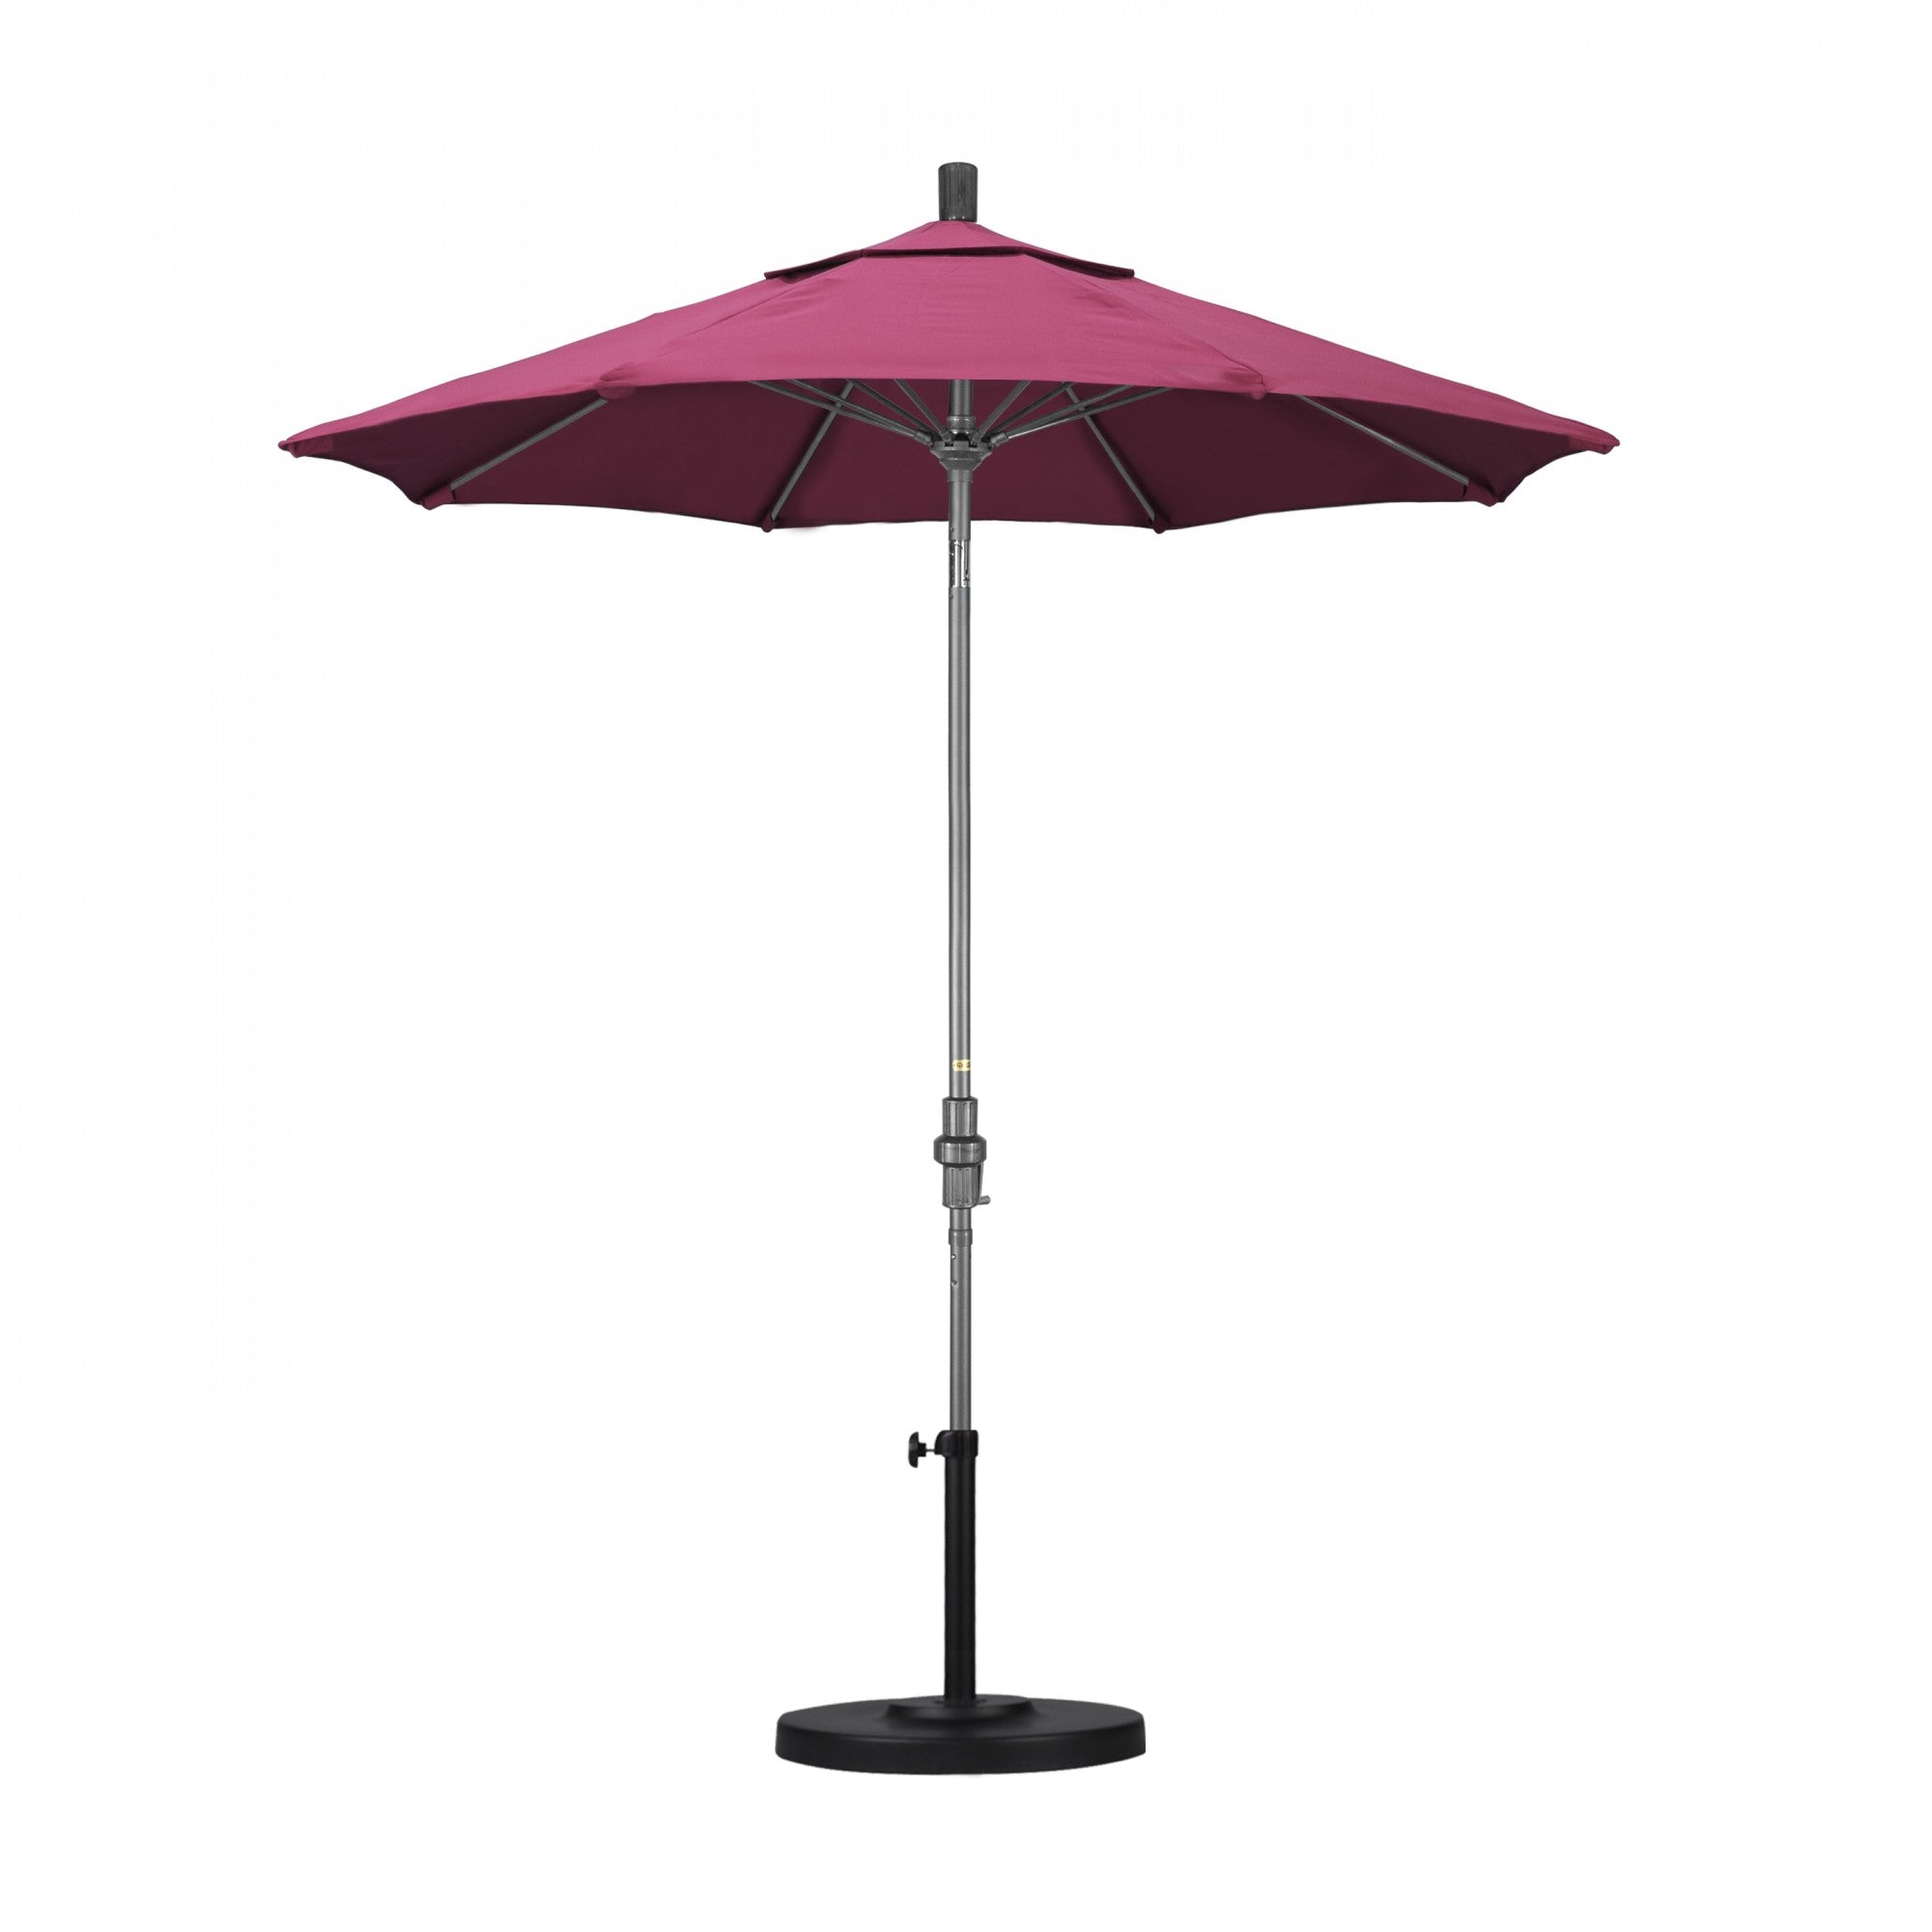 California Umbrella - 7.5' - Patio Umbrella Umbrella - Aluminum Pole - Hot Pink - Sunbrella  - GSCUF758010-5462